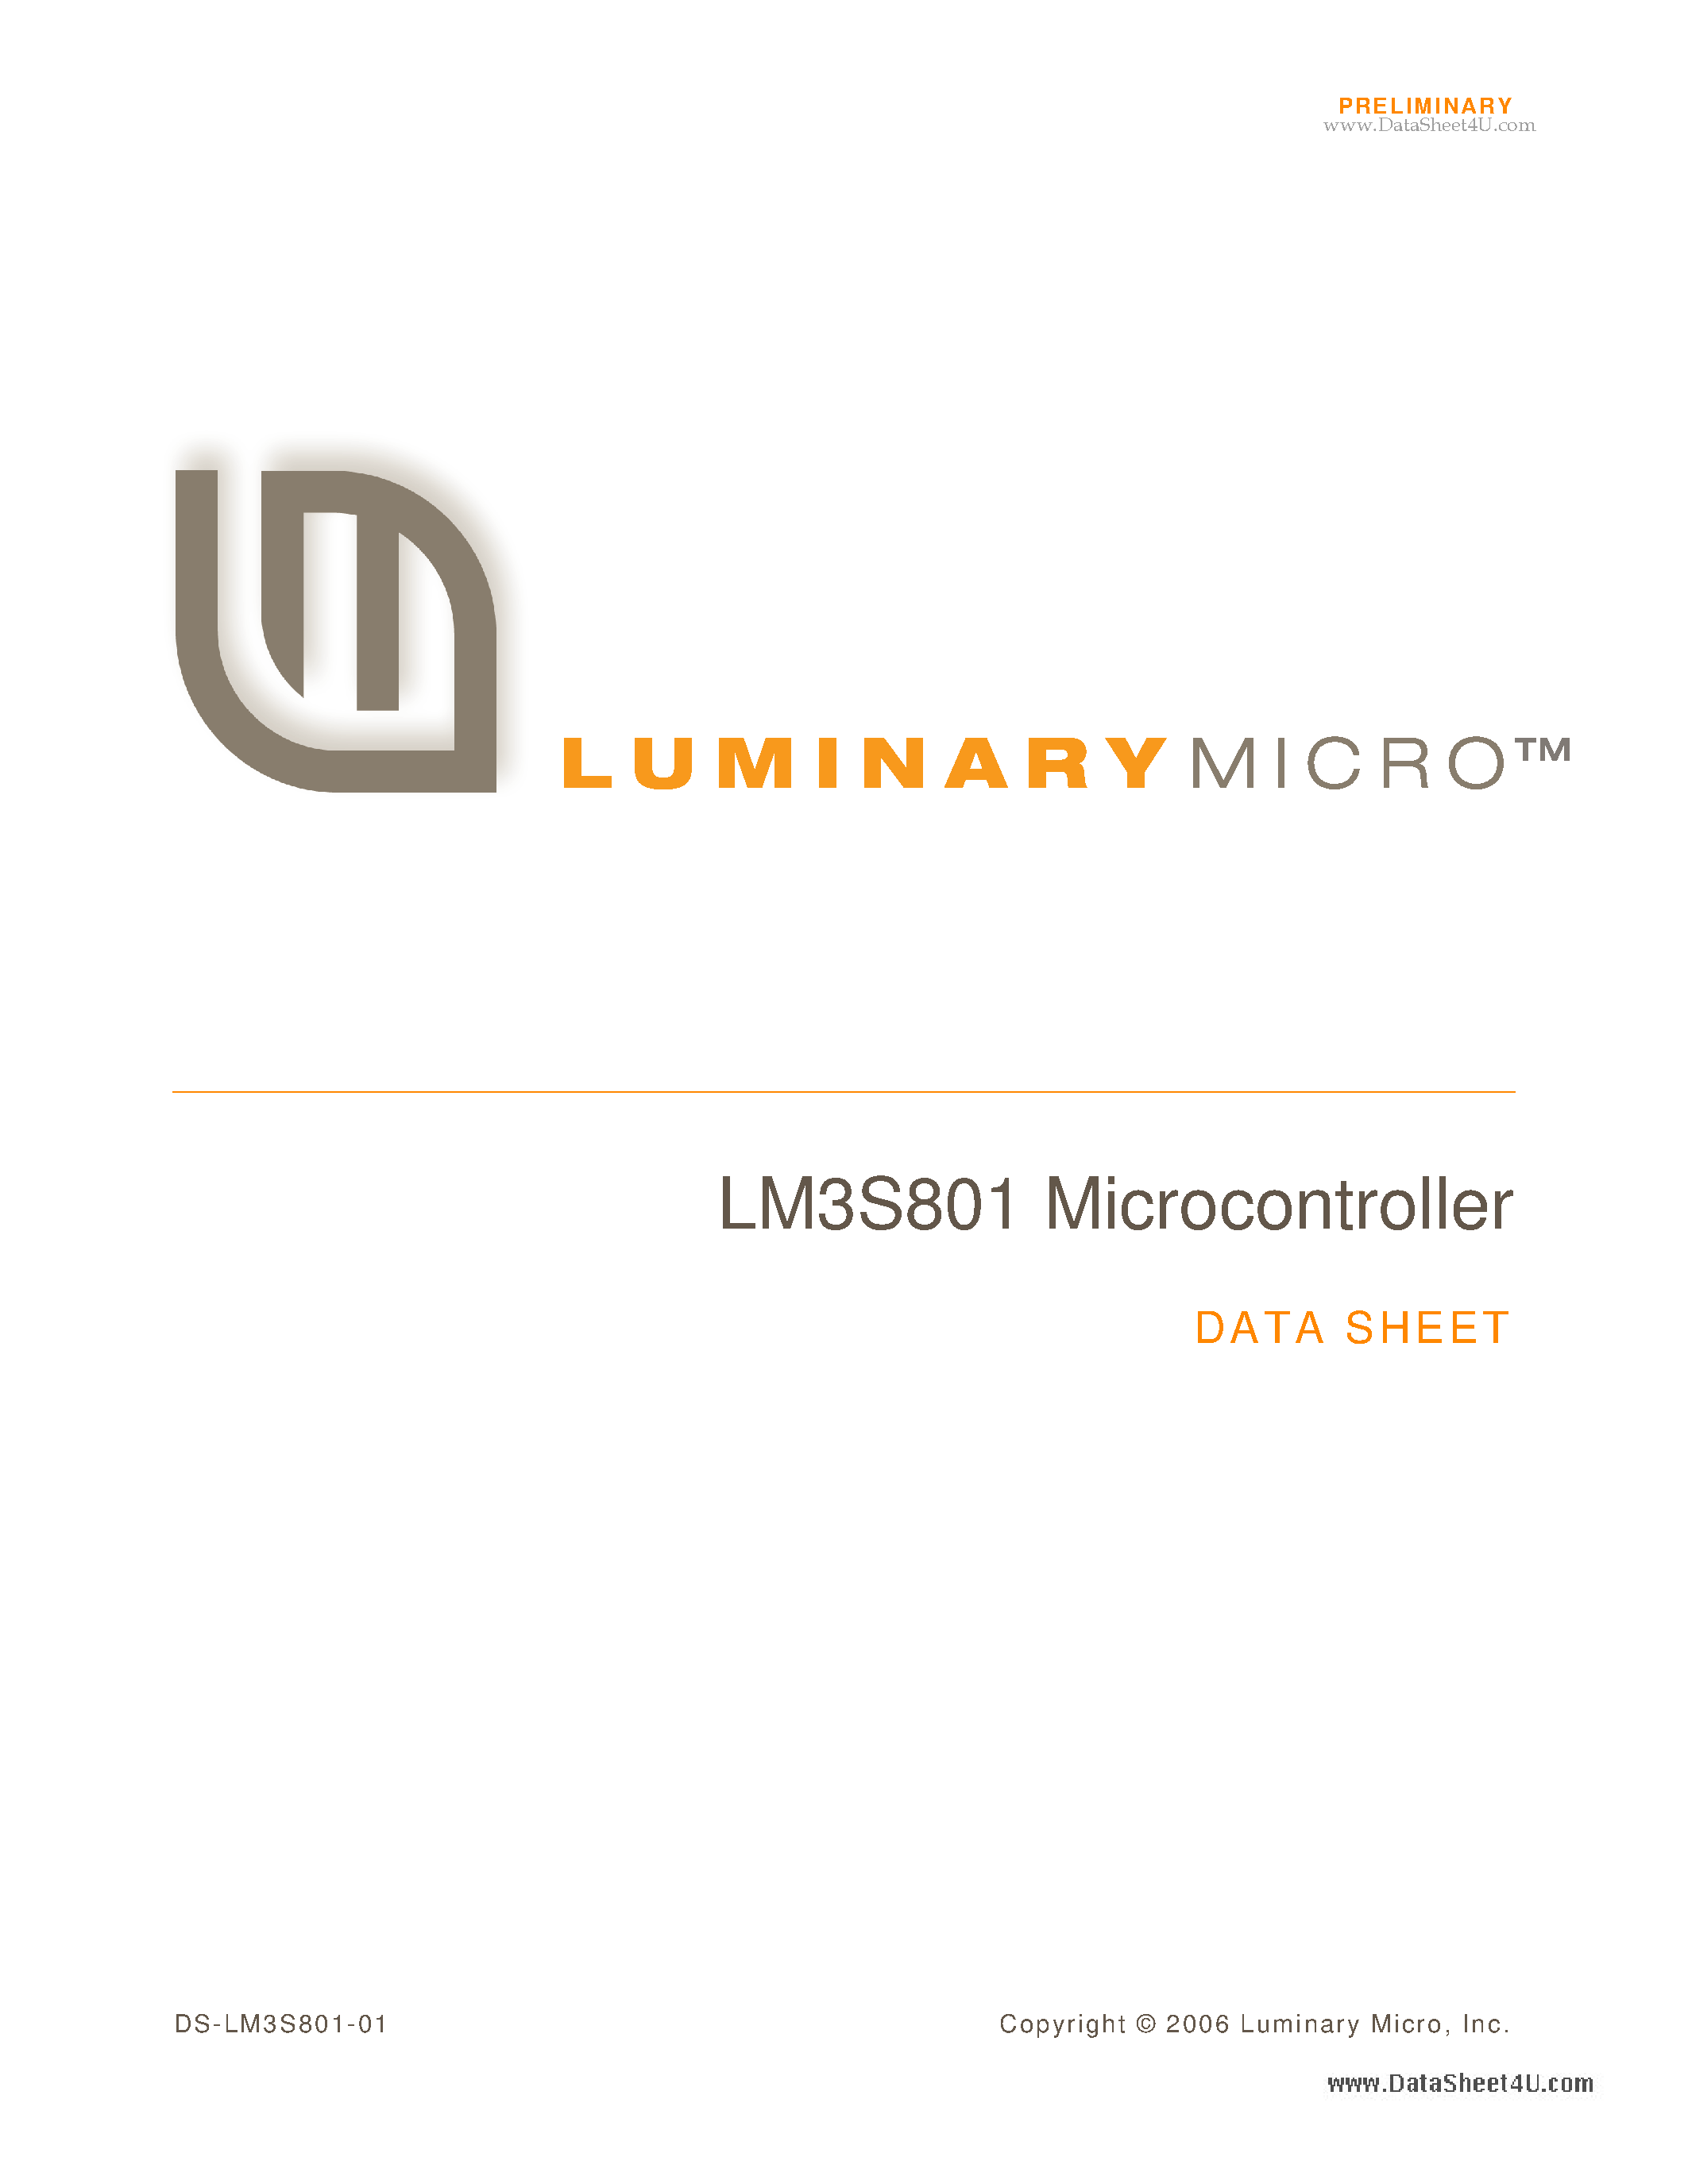 Даташит LM3S801 - Microcontroller страница 1